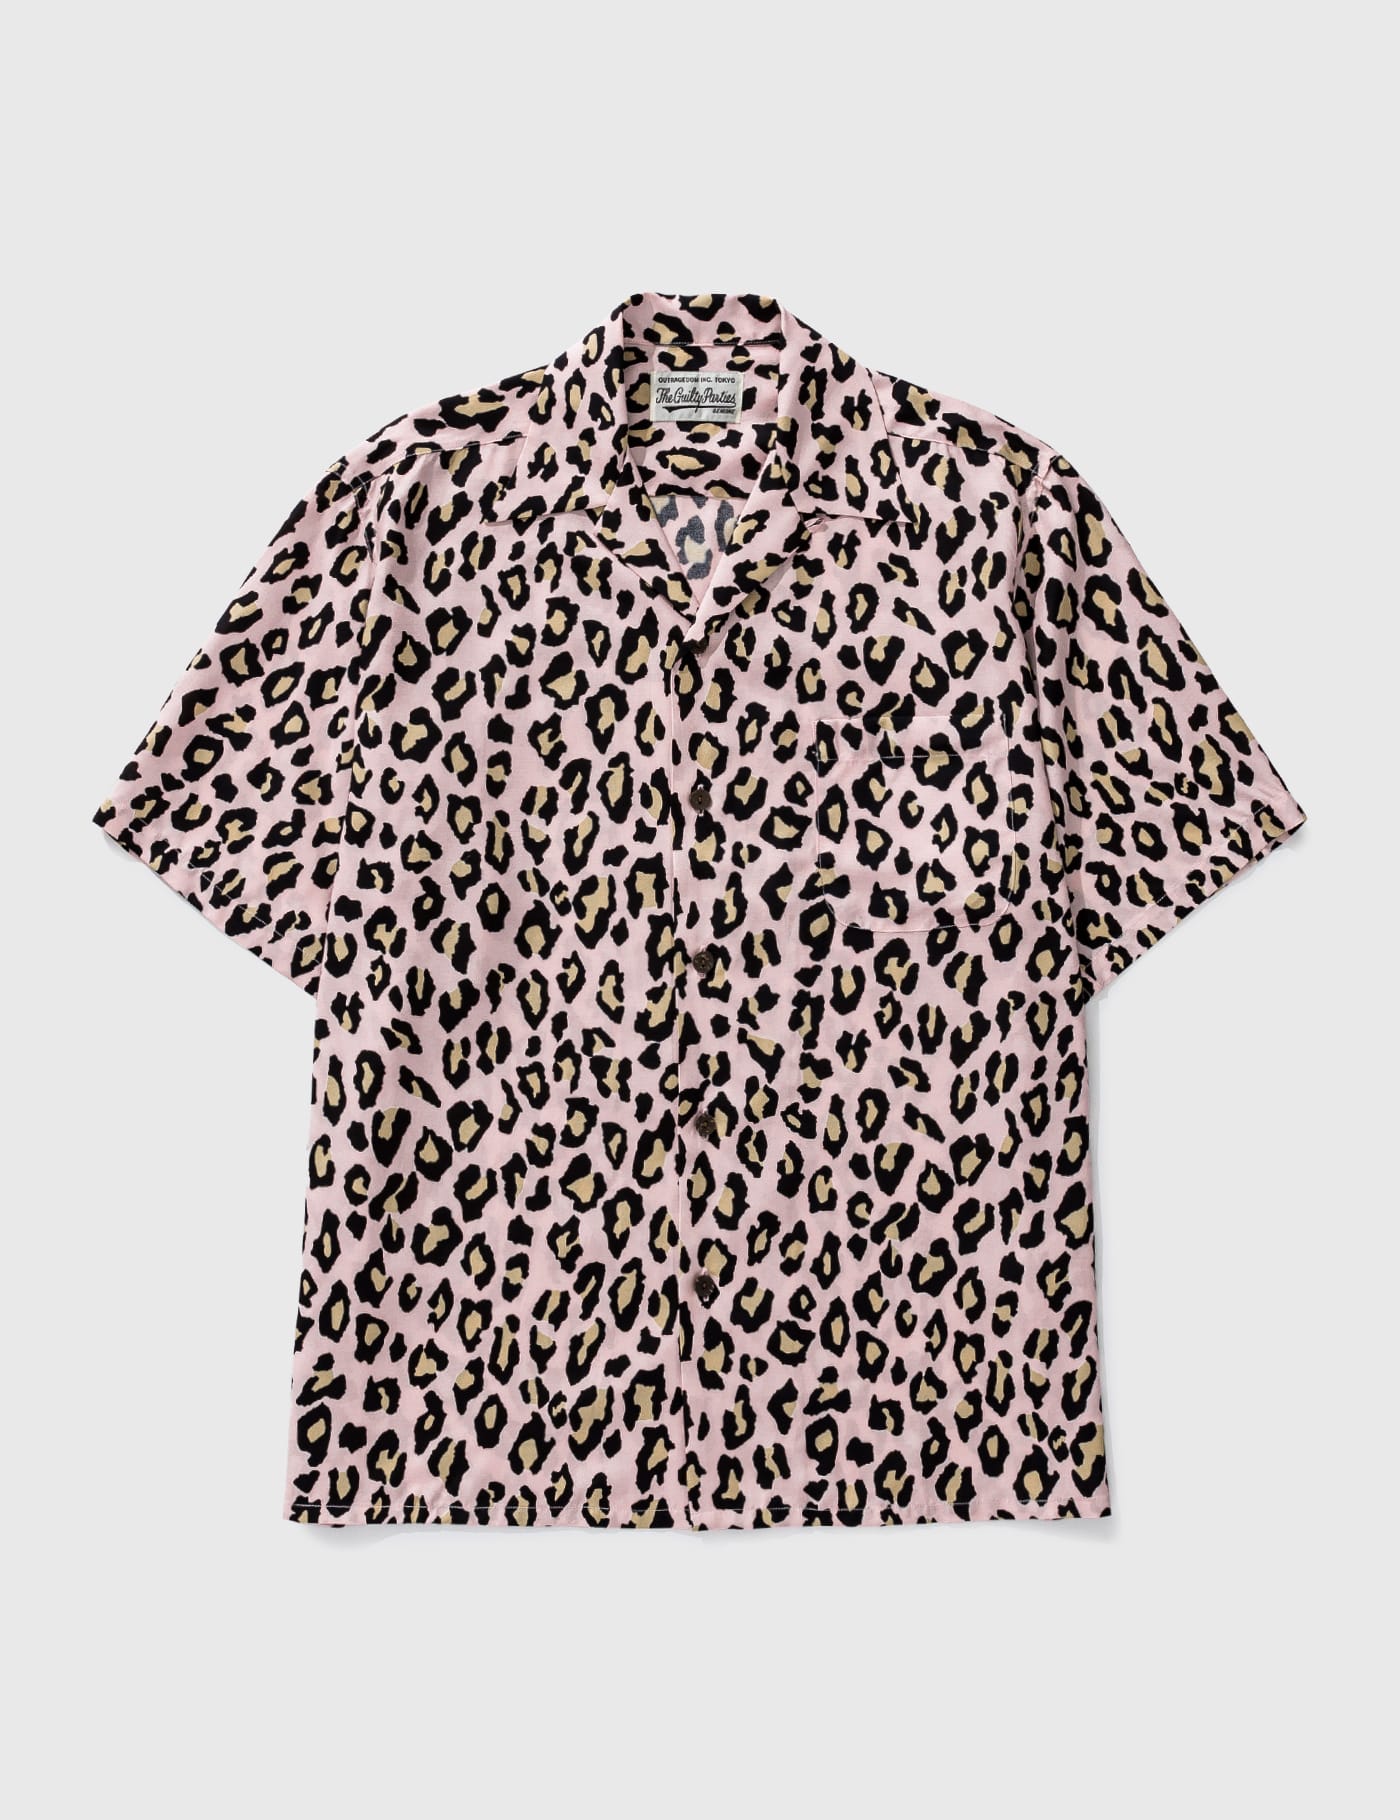 Wacko Maria - Leopard Open Collar Shirt | HBX - HYPEBEAST 为您搜罗全球潮流时尚品牌